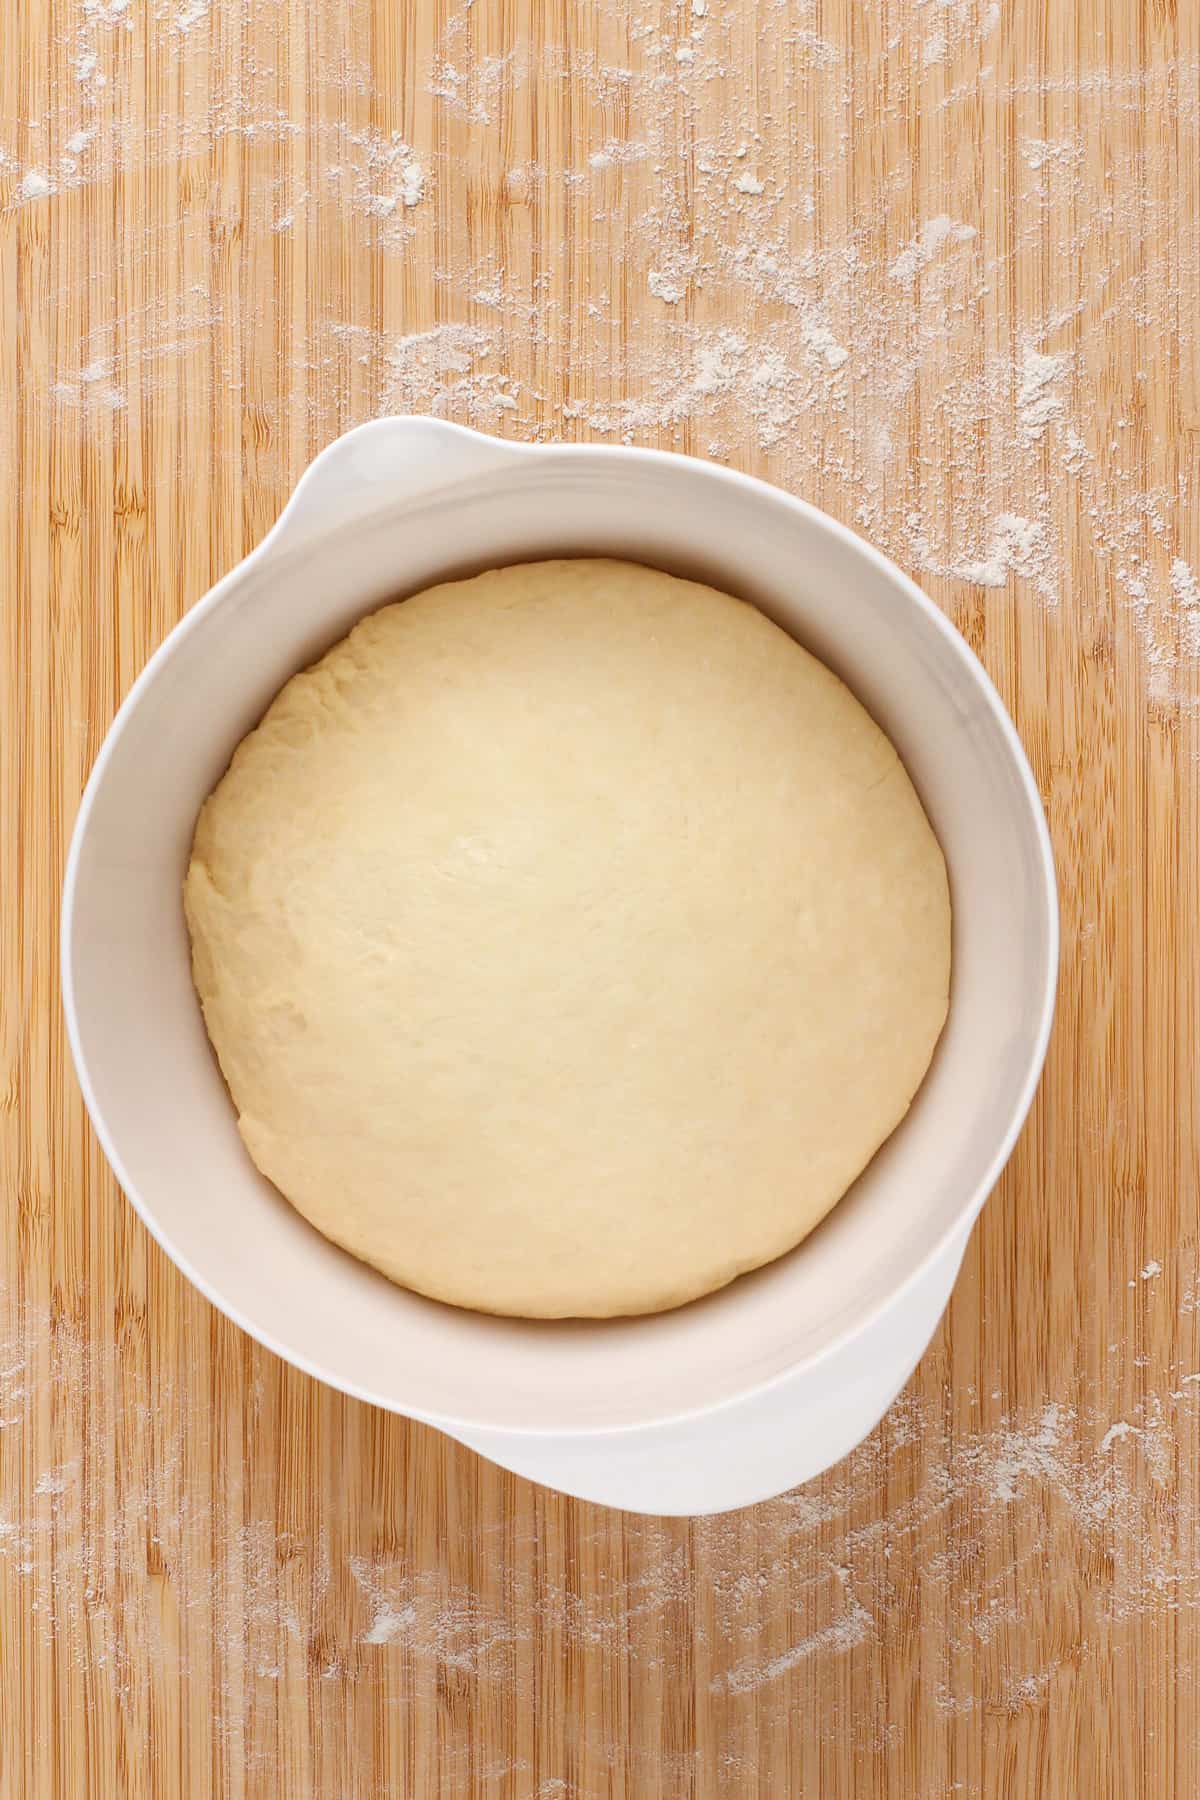 Risen bread dough in a white bowl.